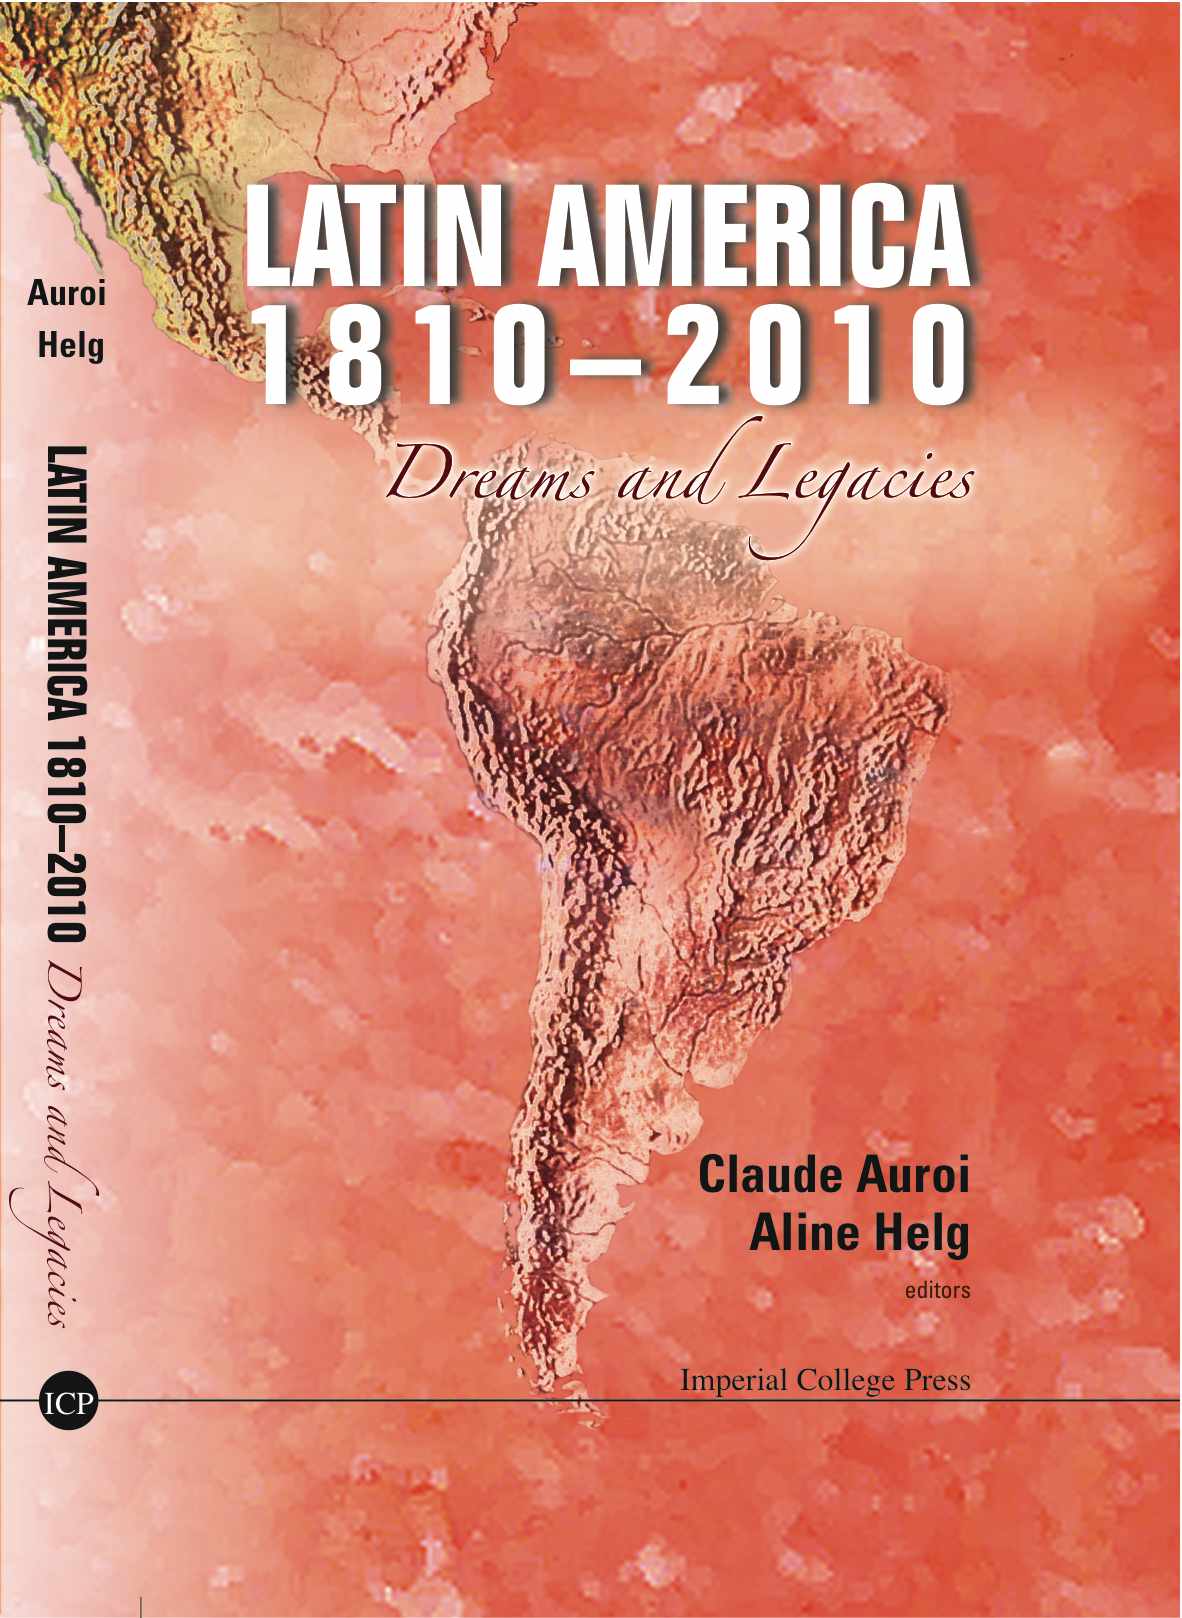 Latin America 1810-2010